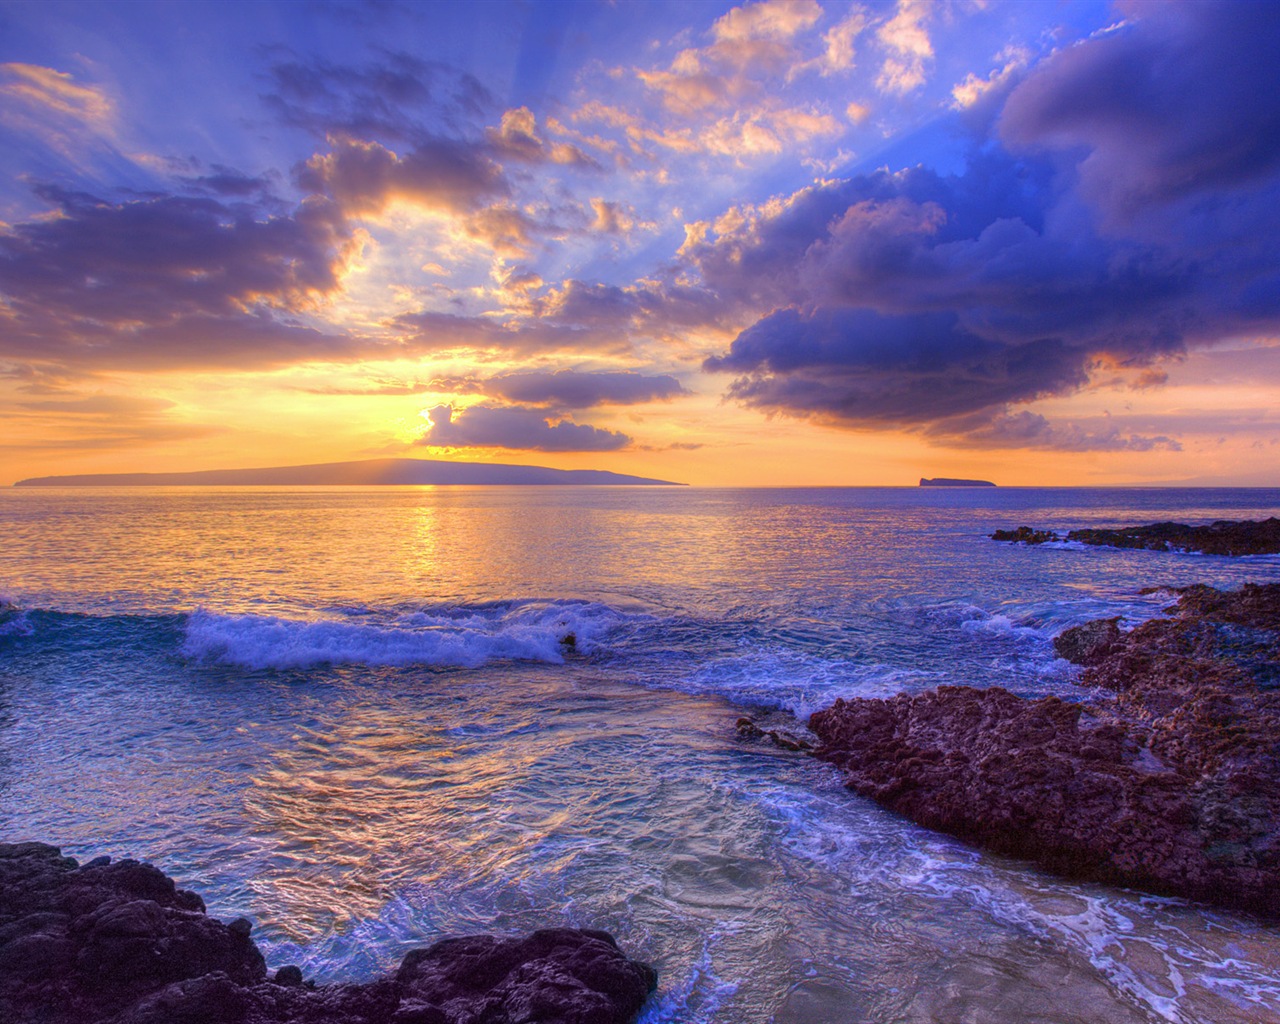 Windows 8 theme wallpaper: Beach sunrise and sunset views #2 - 1280x1024